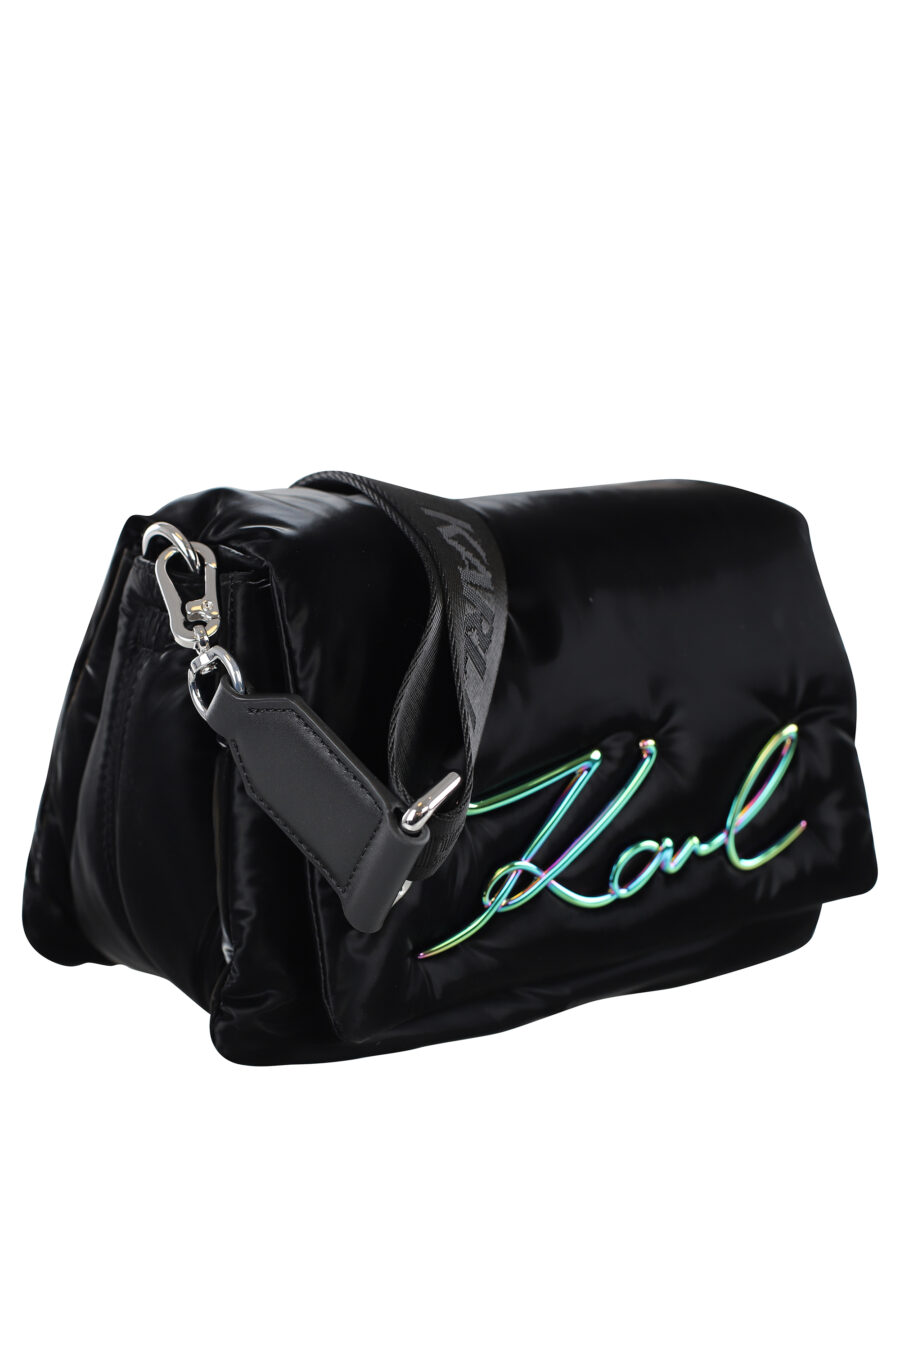 Mini shoulder bag black with autograph logo - IMG 6981